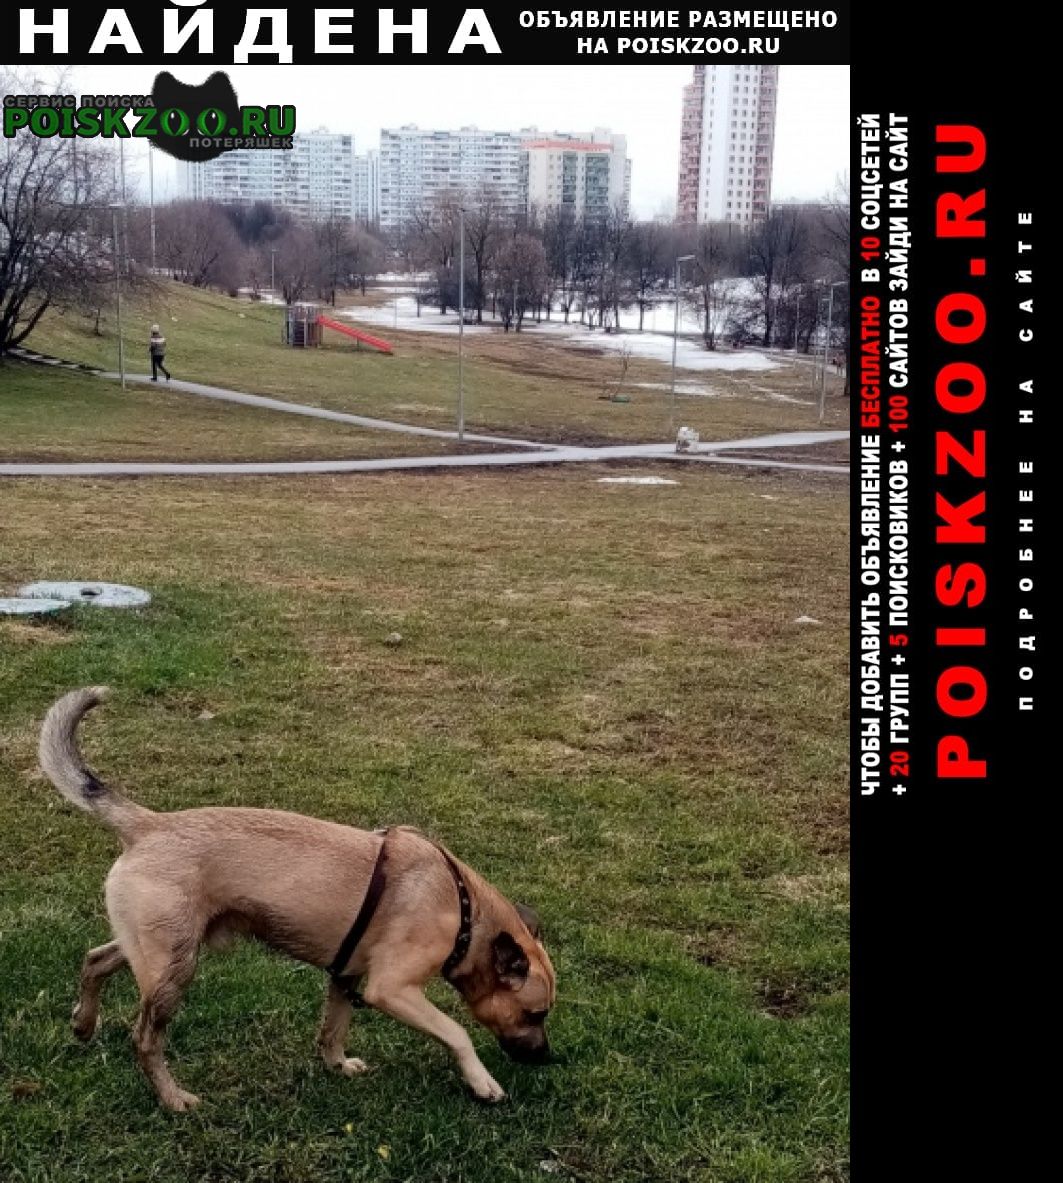 Найдена собака кобель 10 апреля 11:30 утра Москва